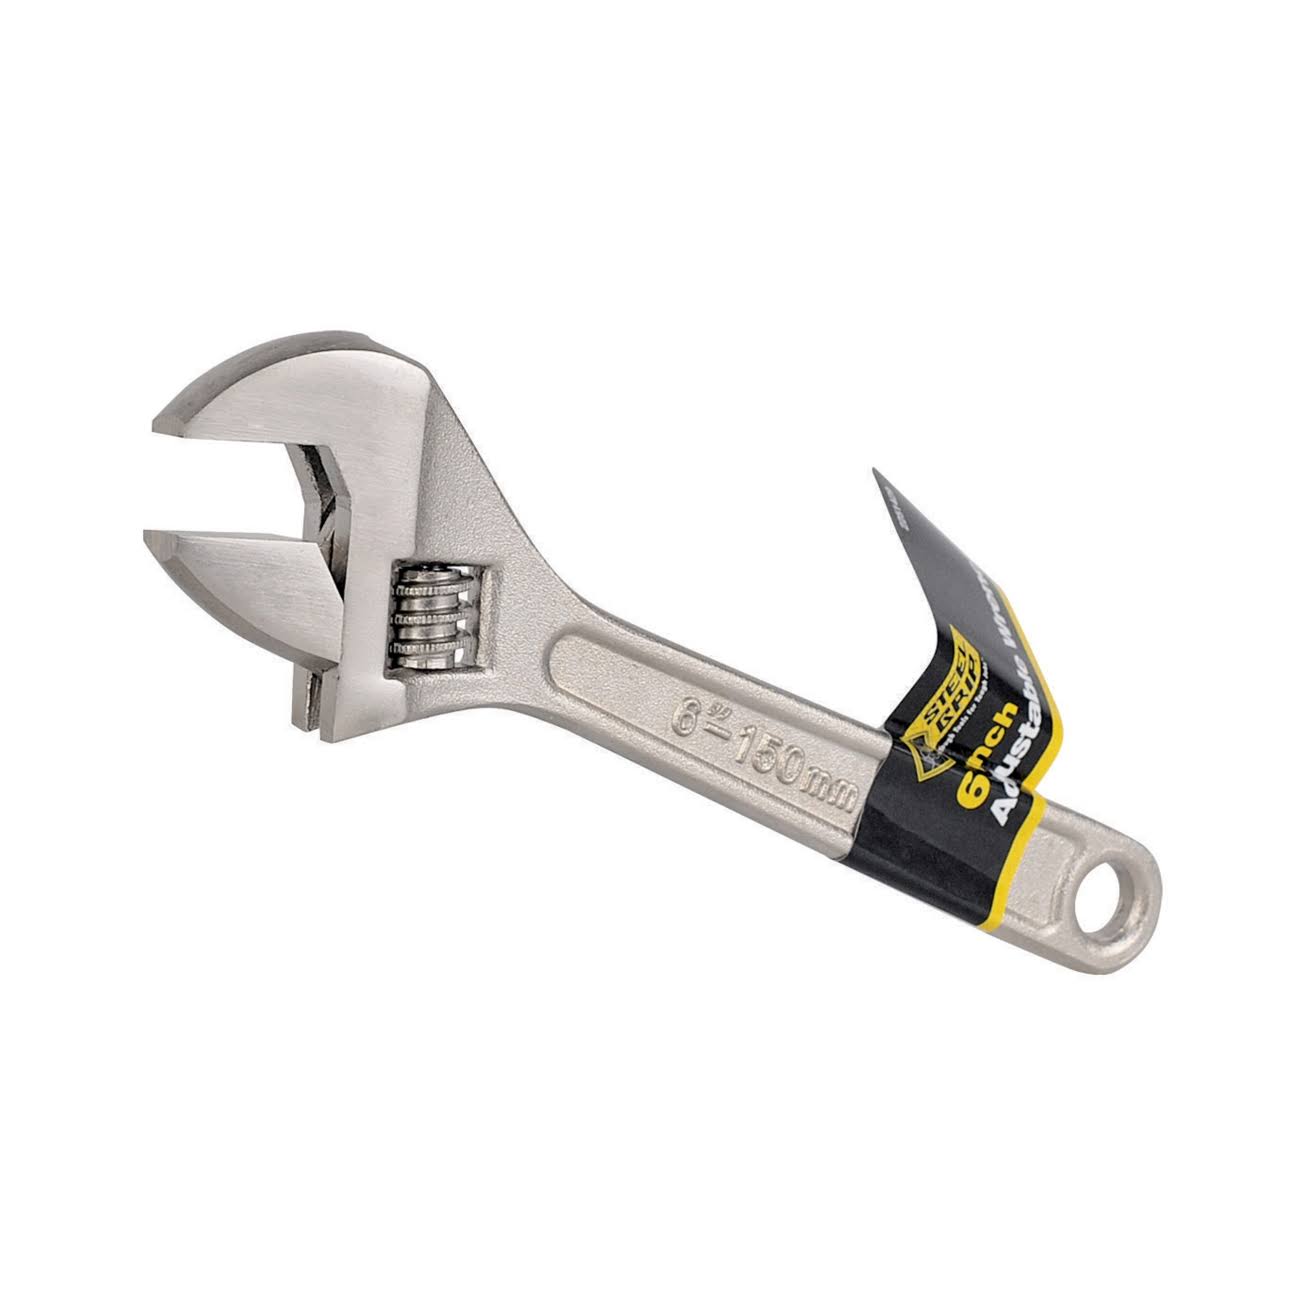 Steelgrip Adjustable Wrench - 6"